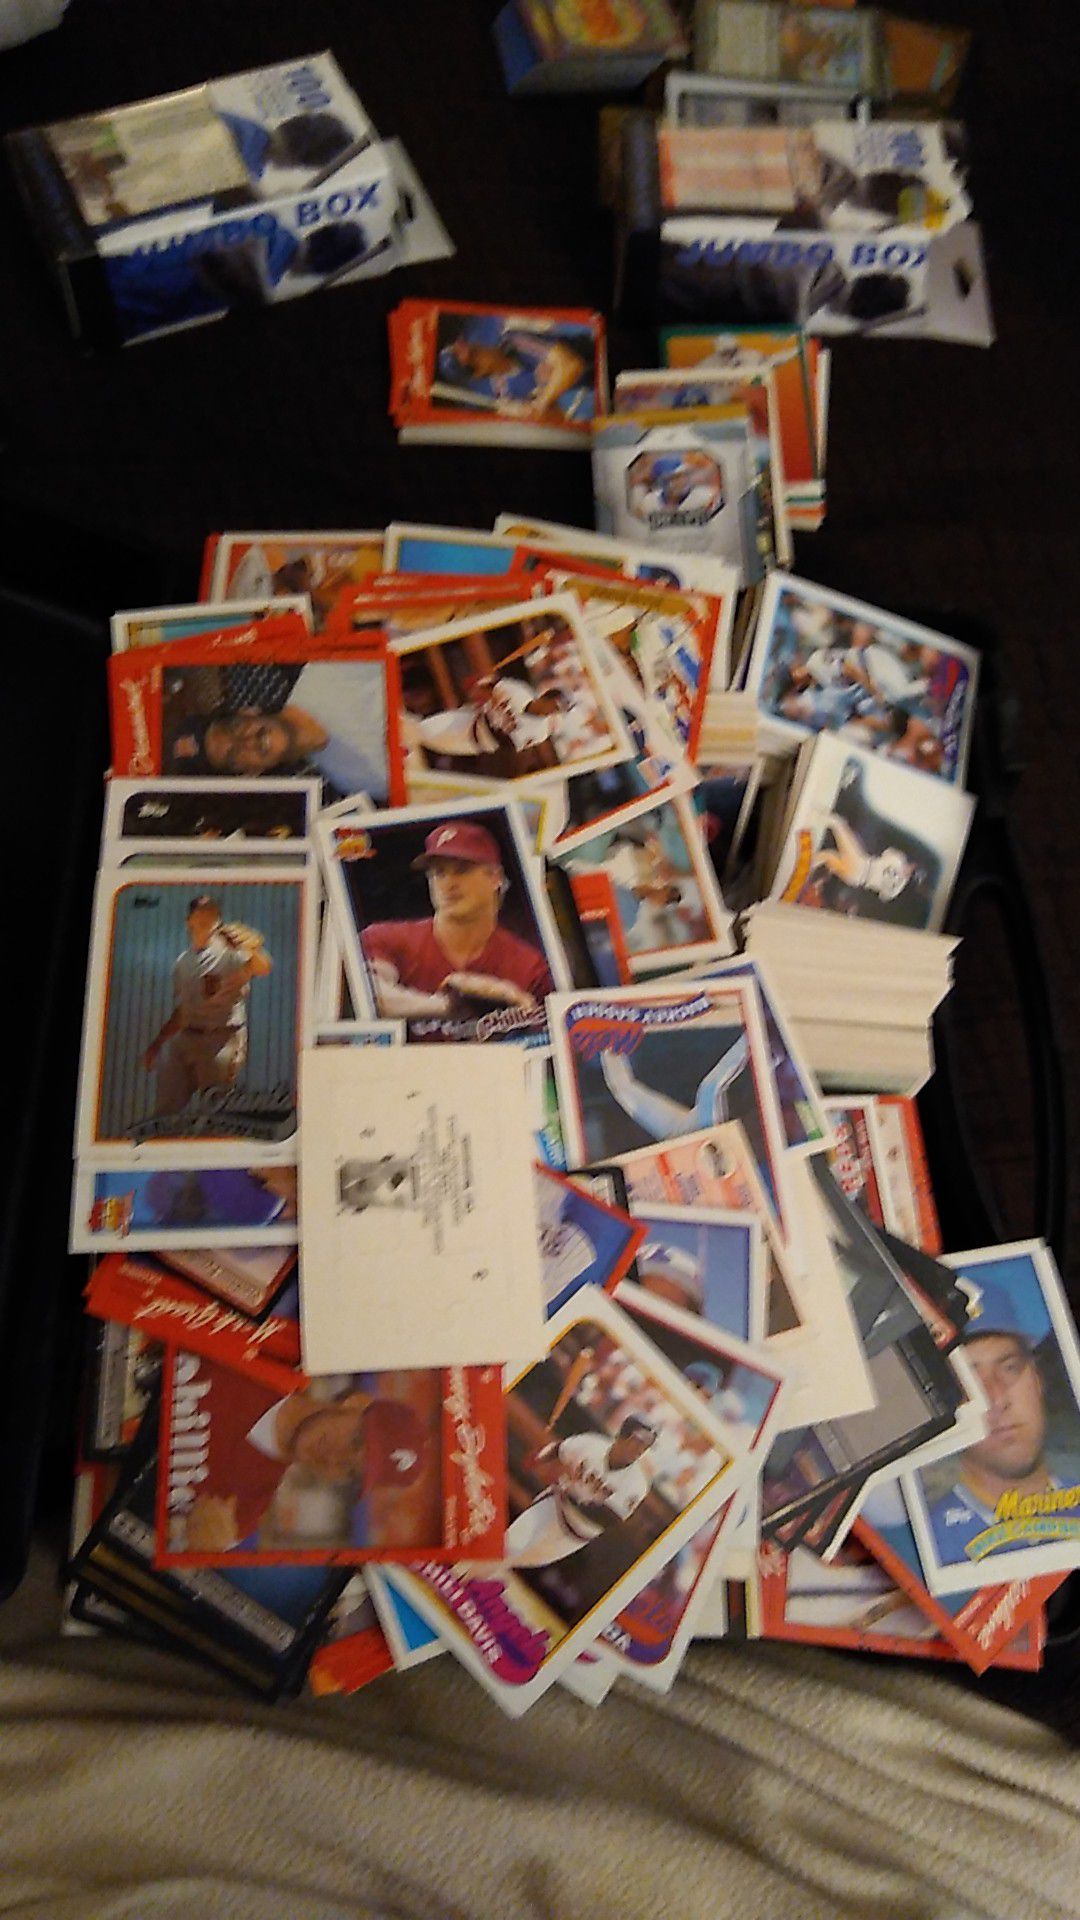 Several thousand baseball/football cards